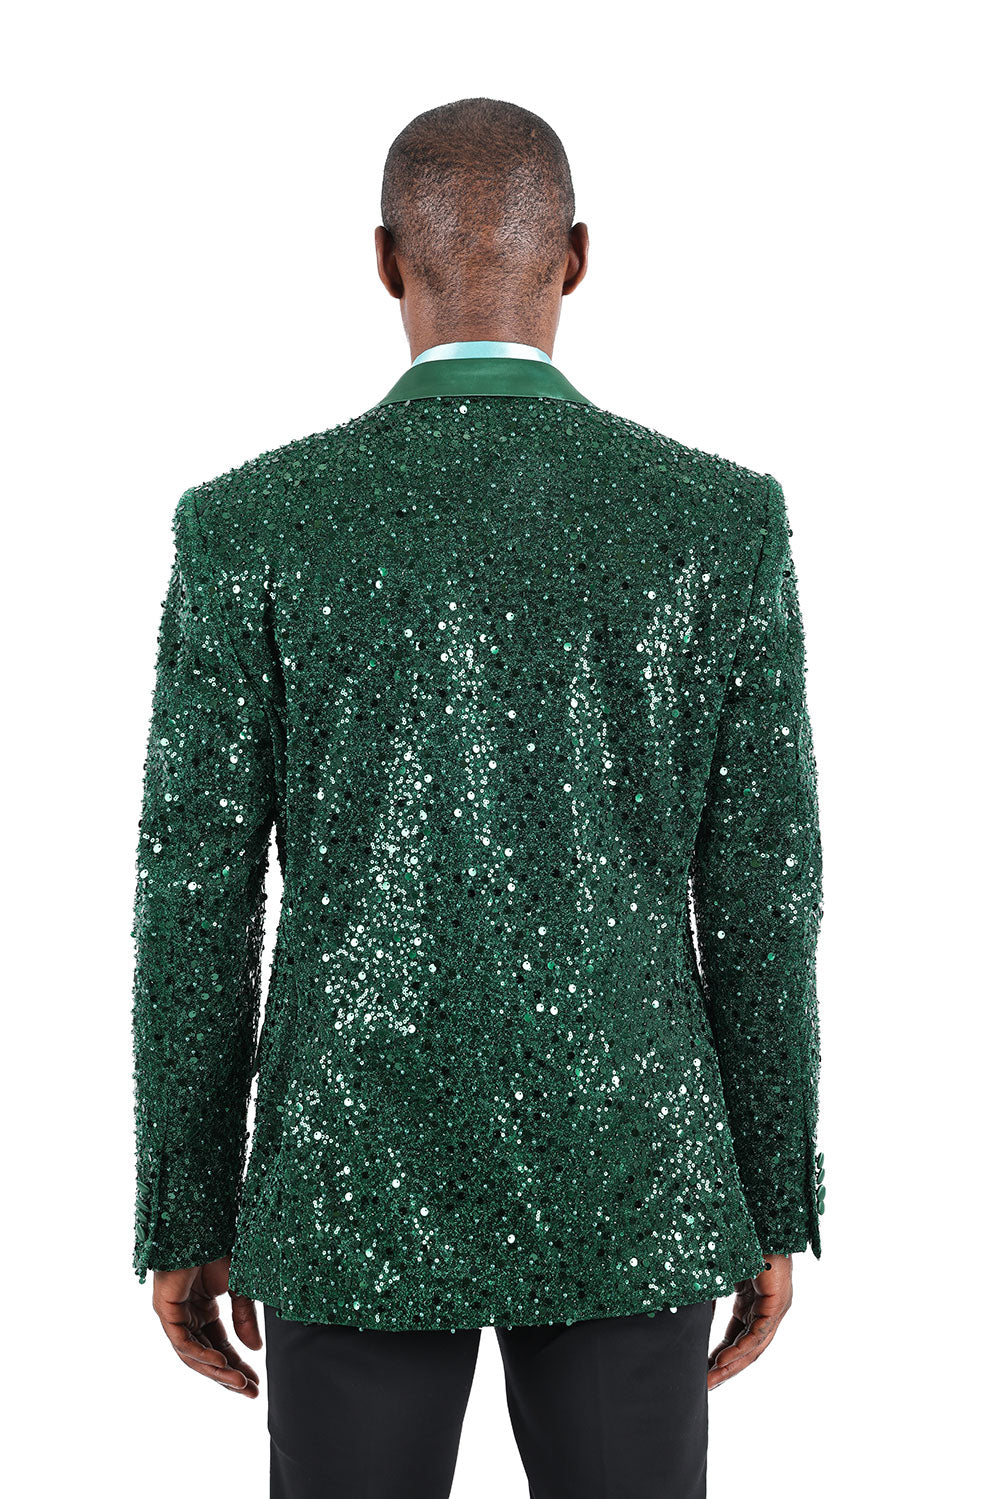 Barabas Men's Shiny Sequins Peak Lapel Luxury blazer 2EBL8 Hunter Green